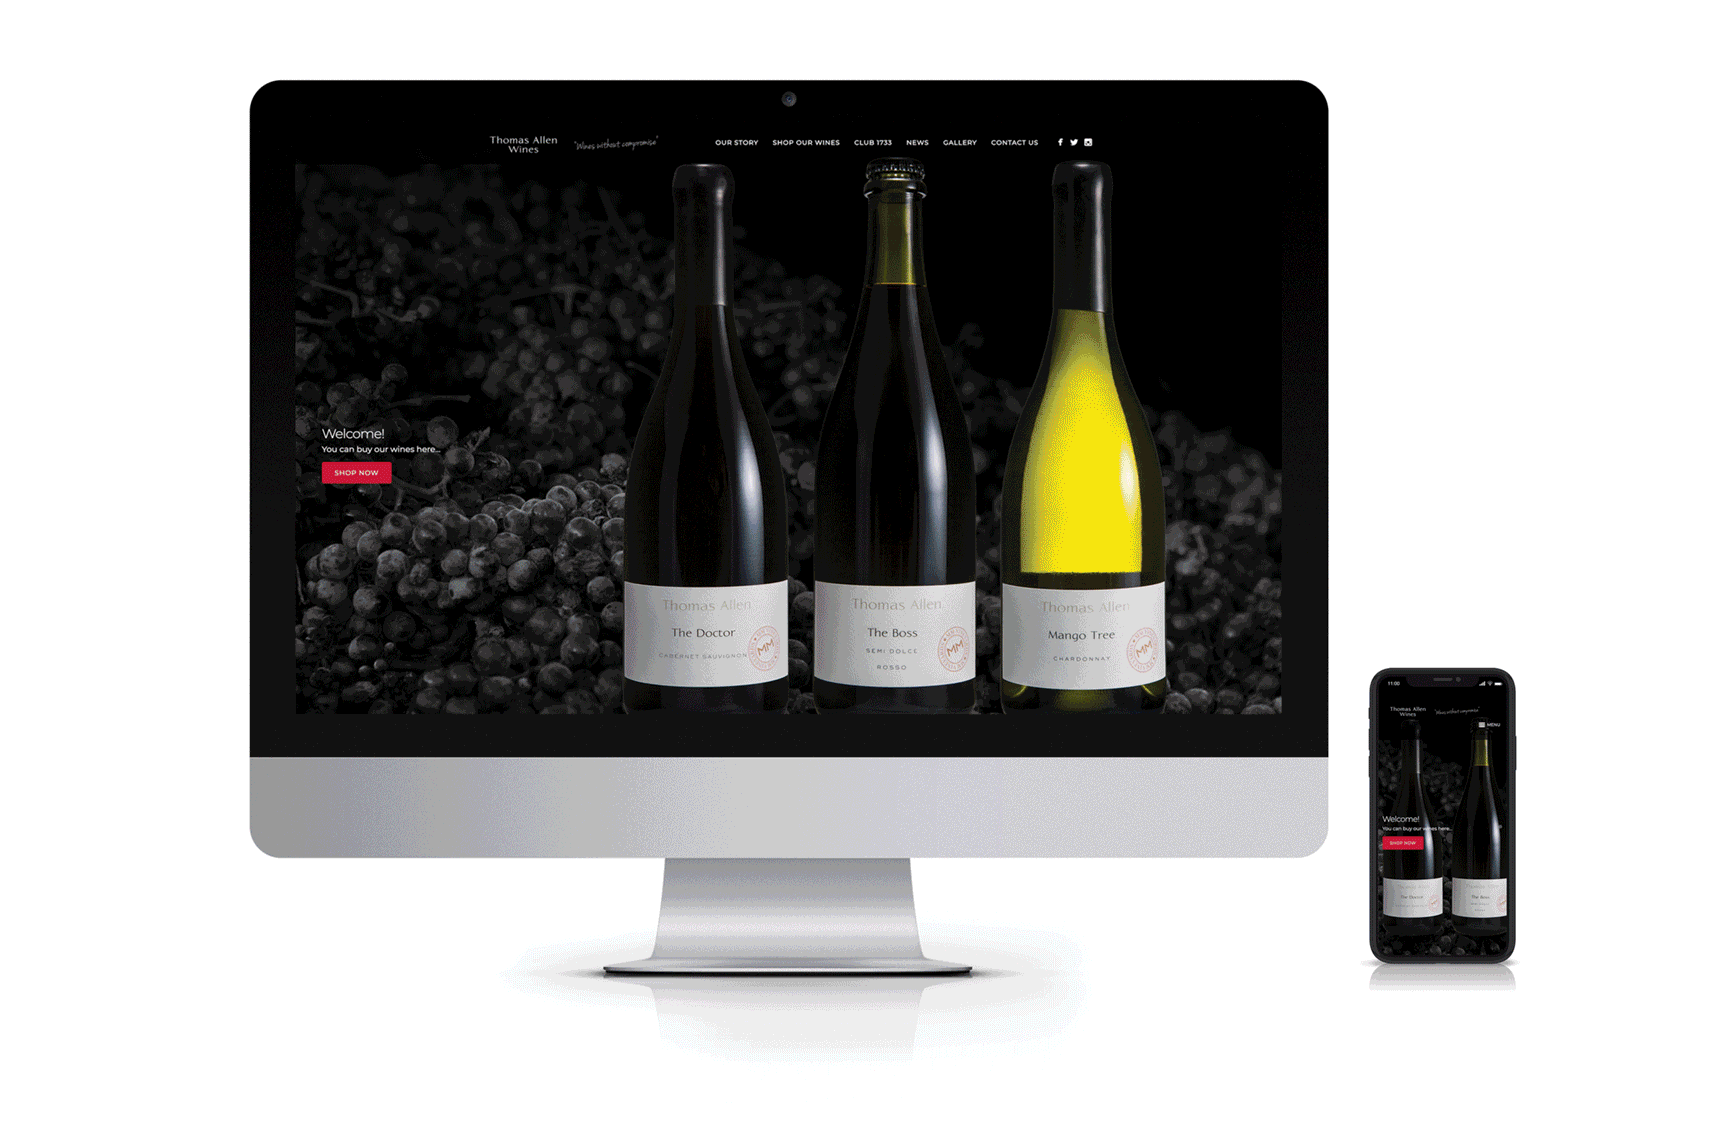 mjk_thomas-allen-wines_01_web